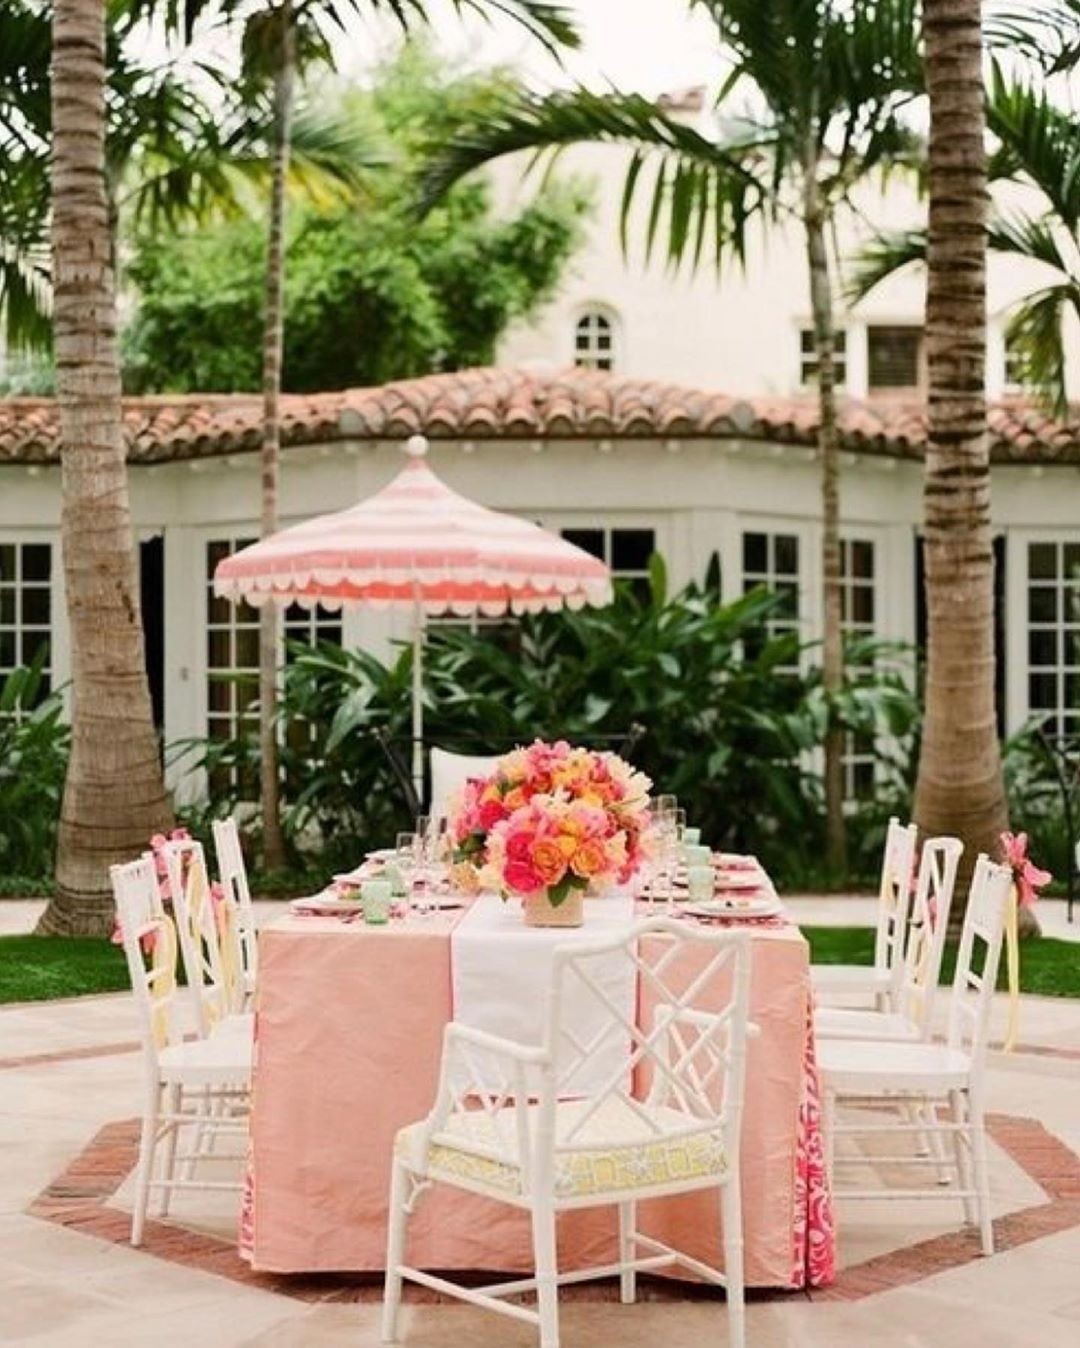 Pink patio umbrella